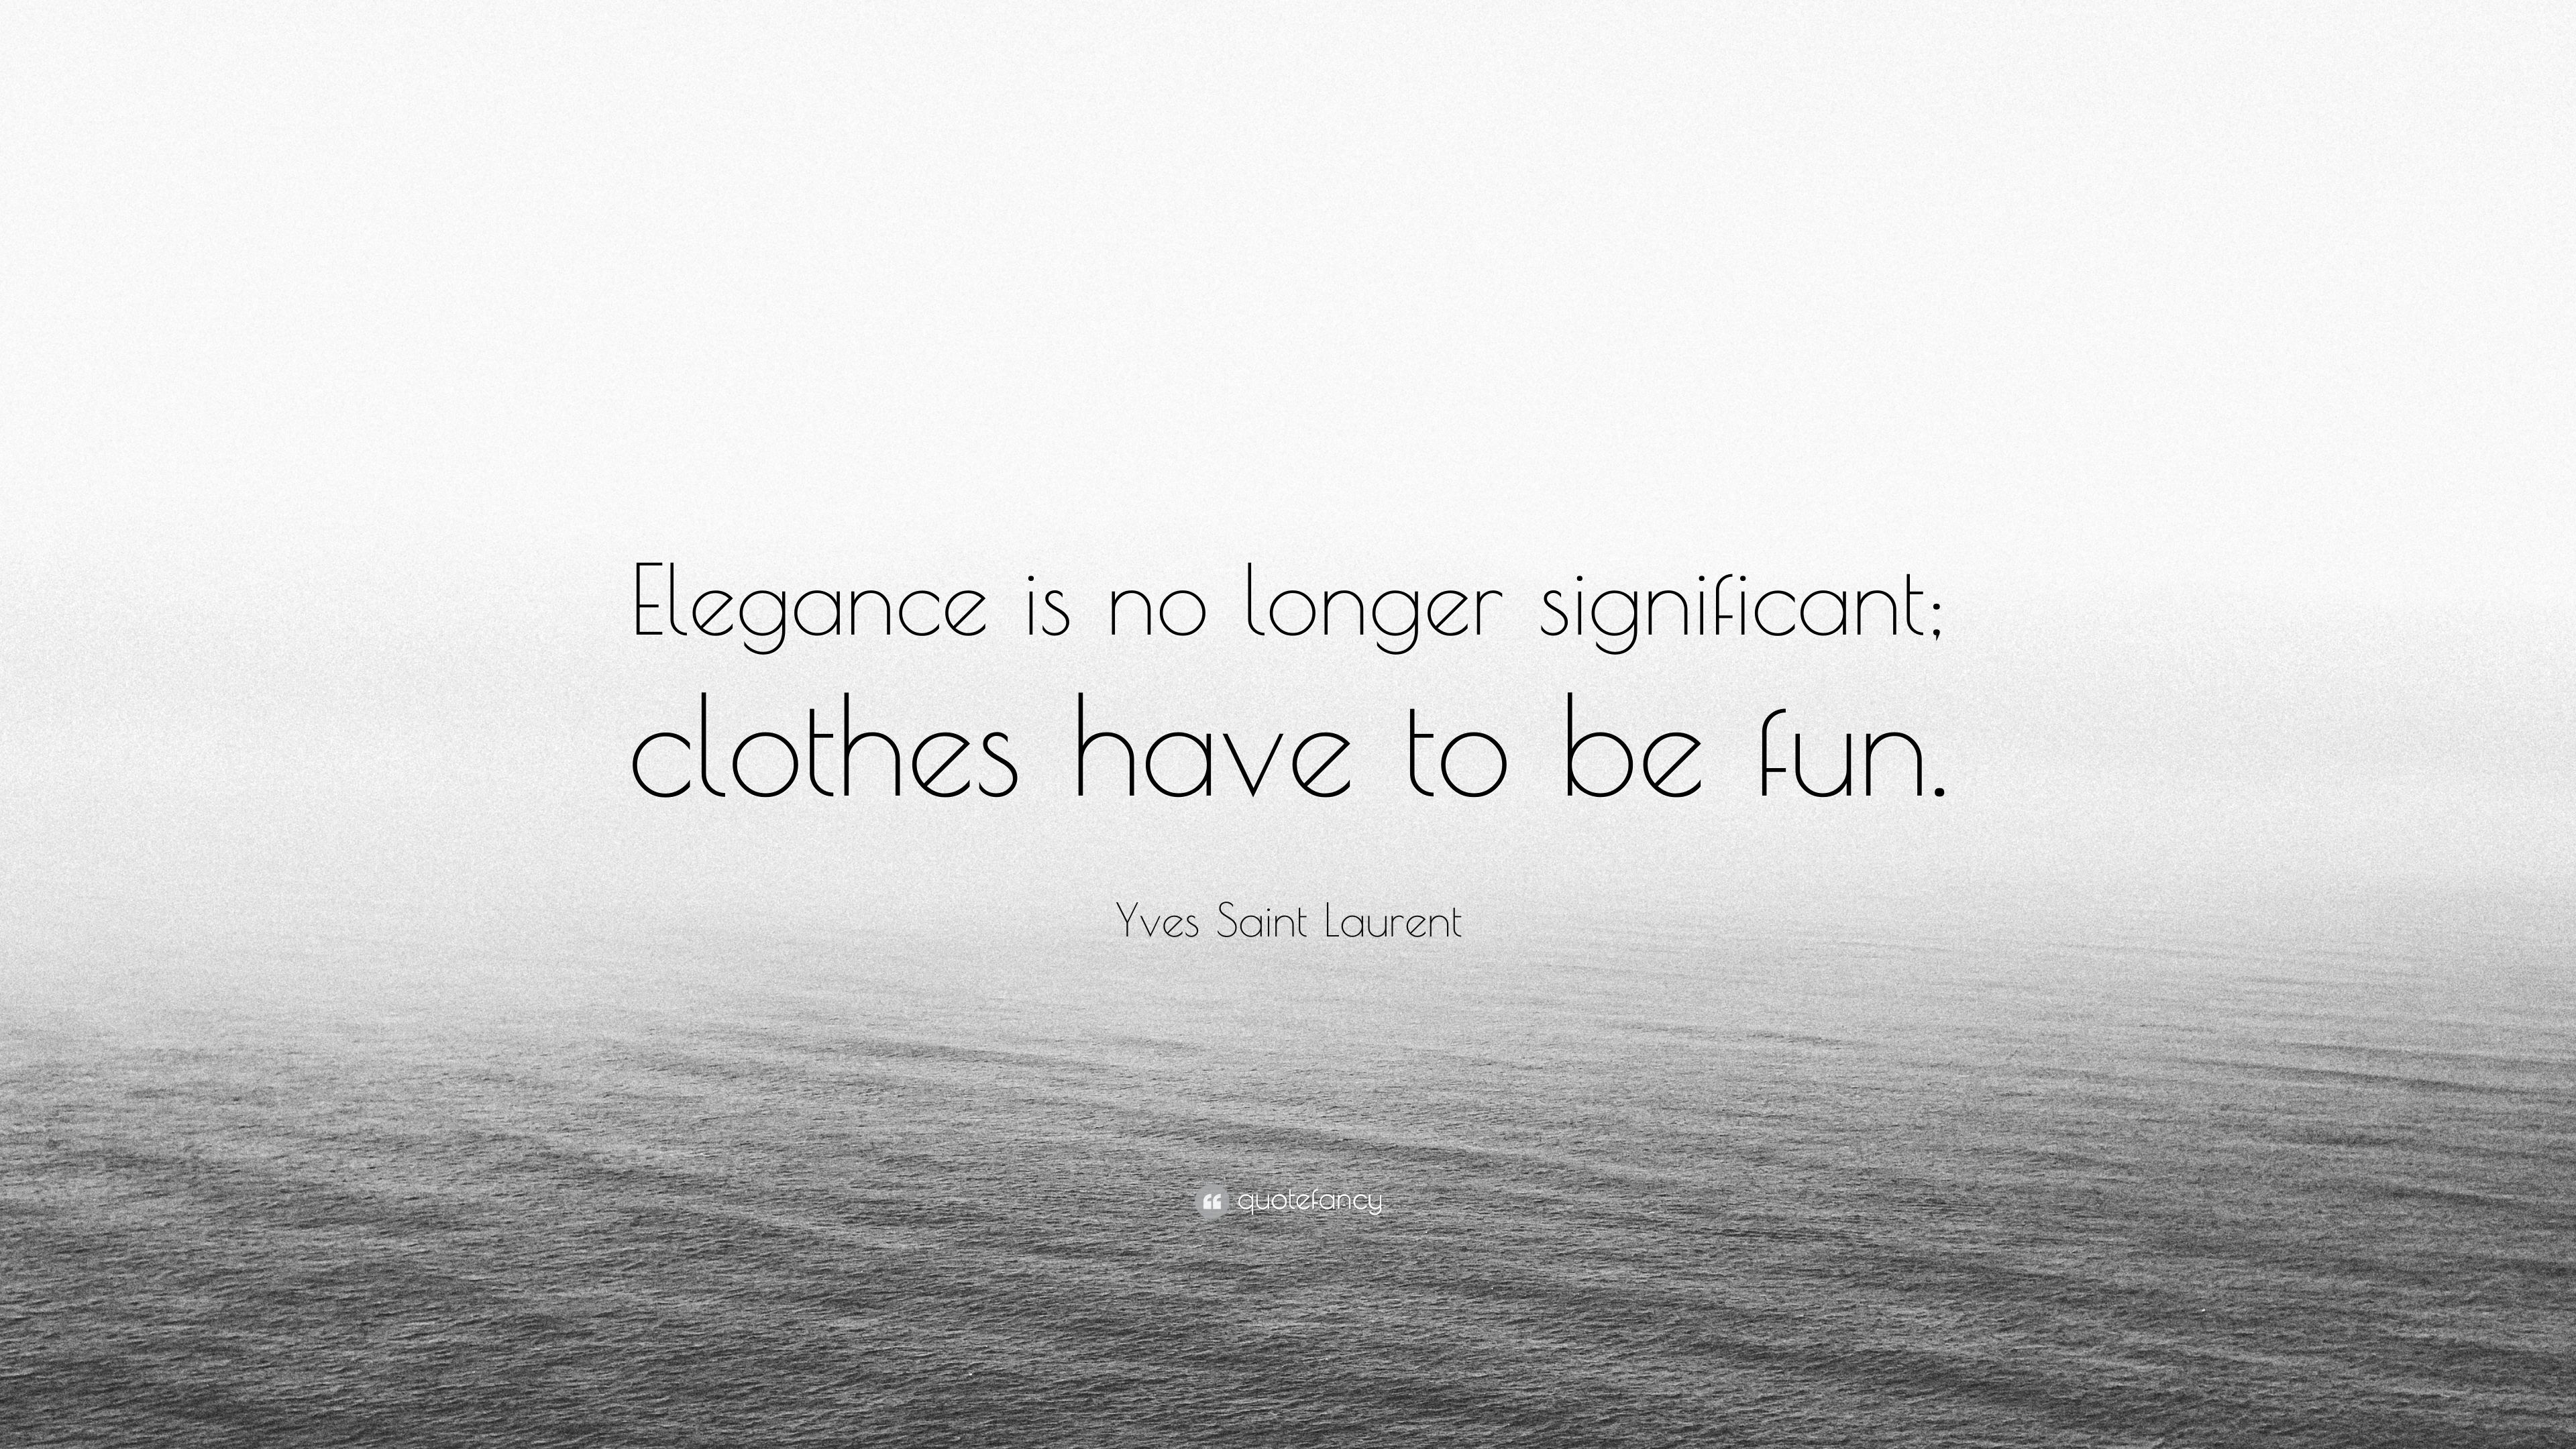 Yves Saint Laurent Quote: “Elegance is no longer significant